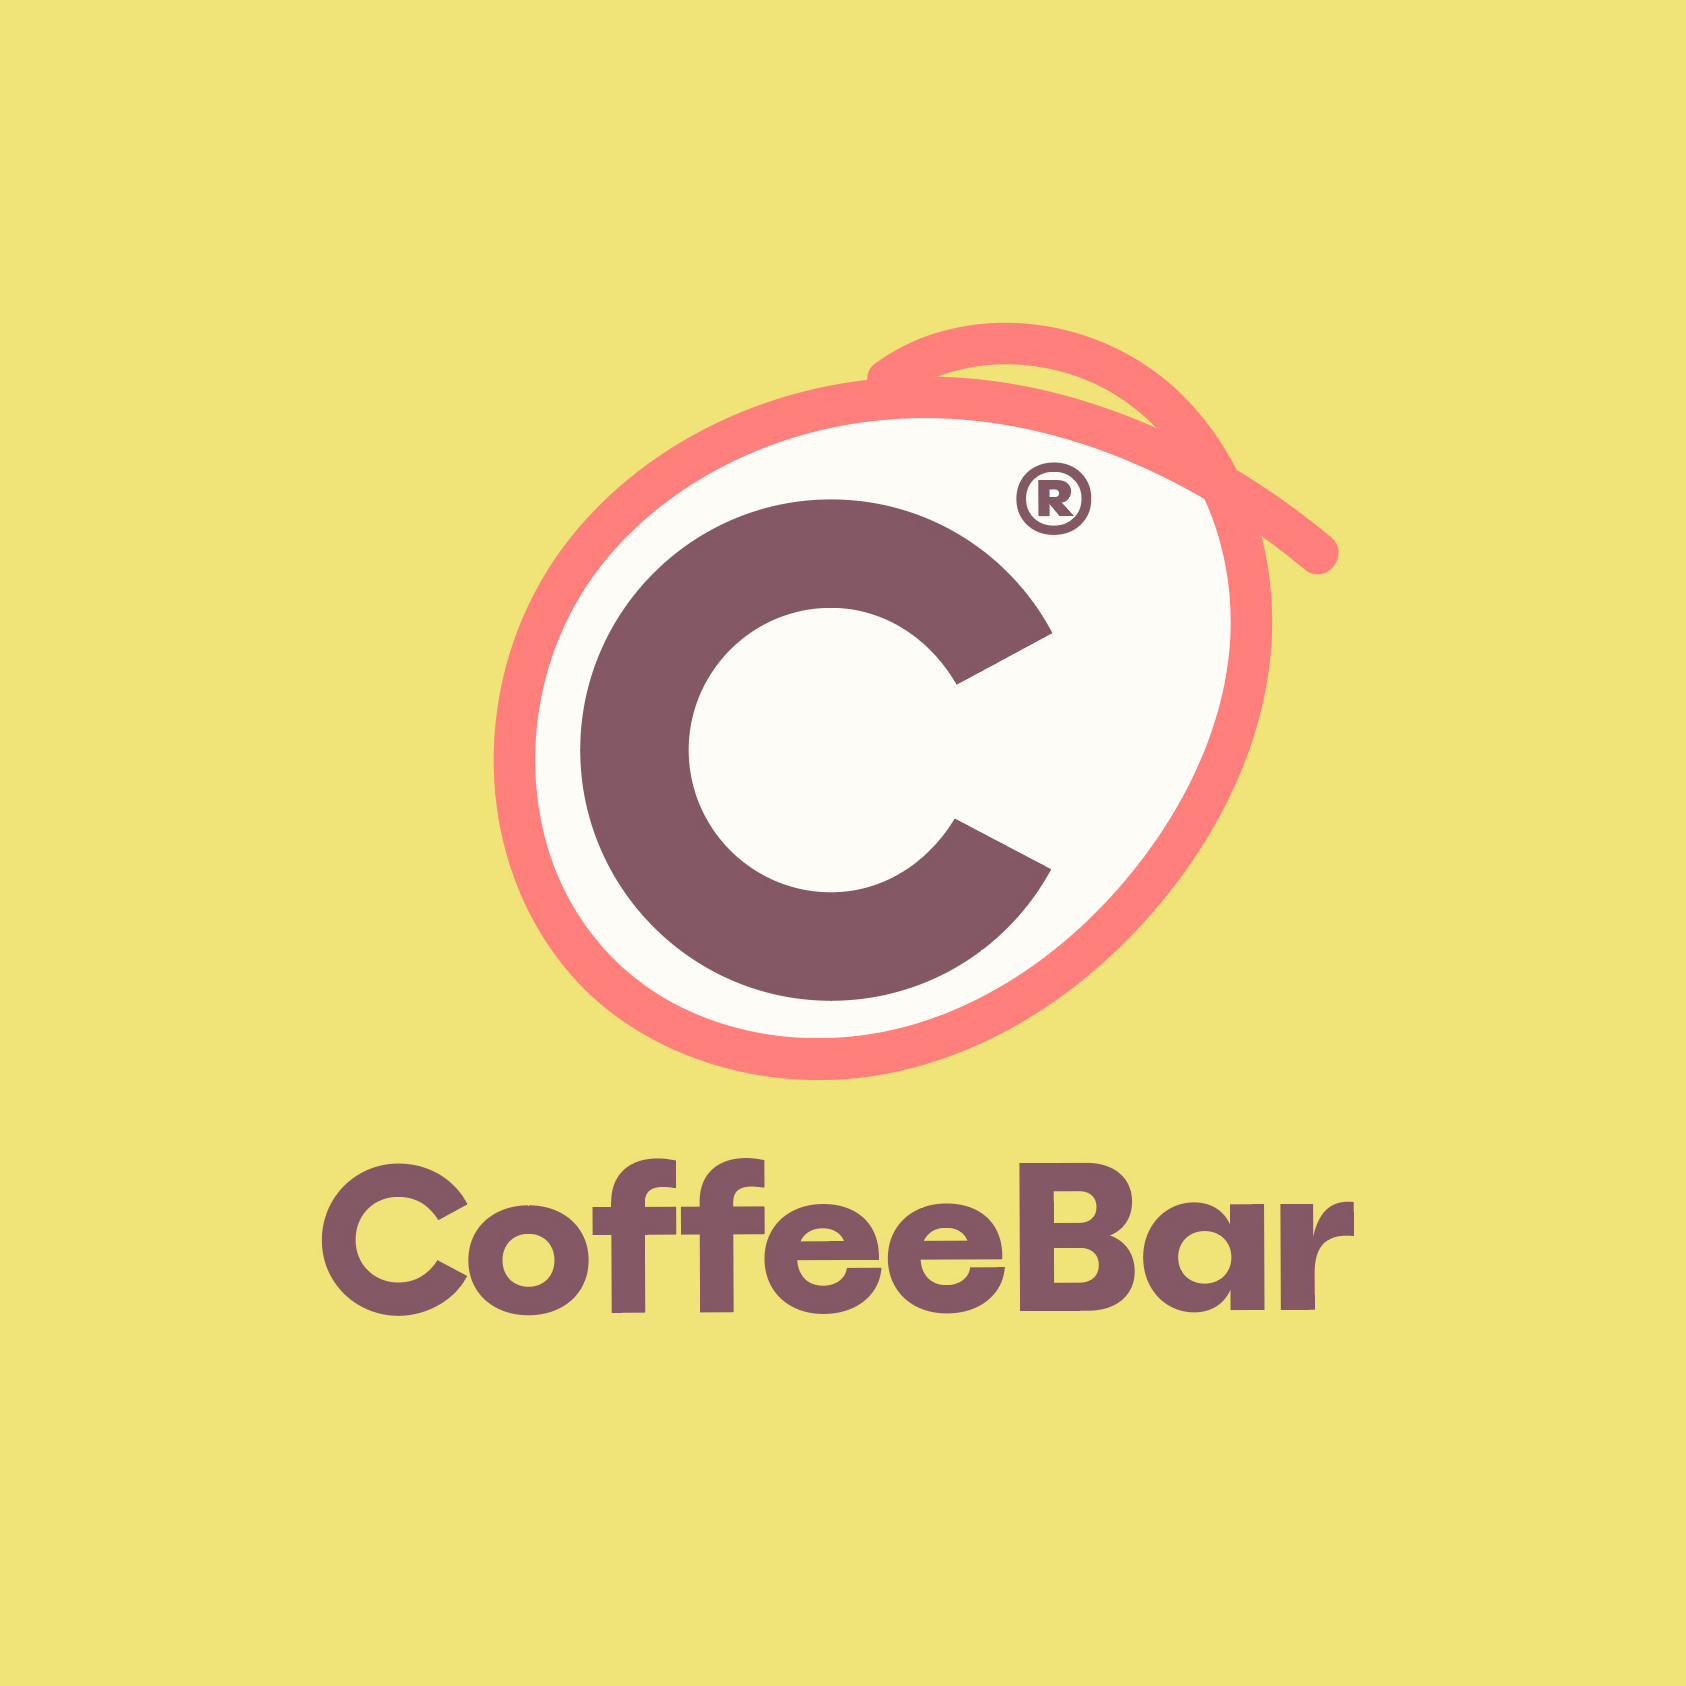 C COFFEE BAR